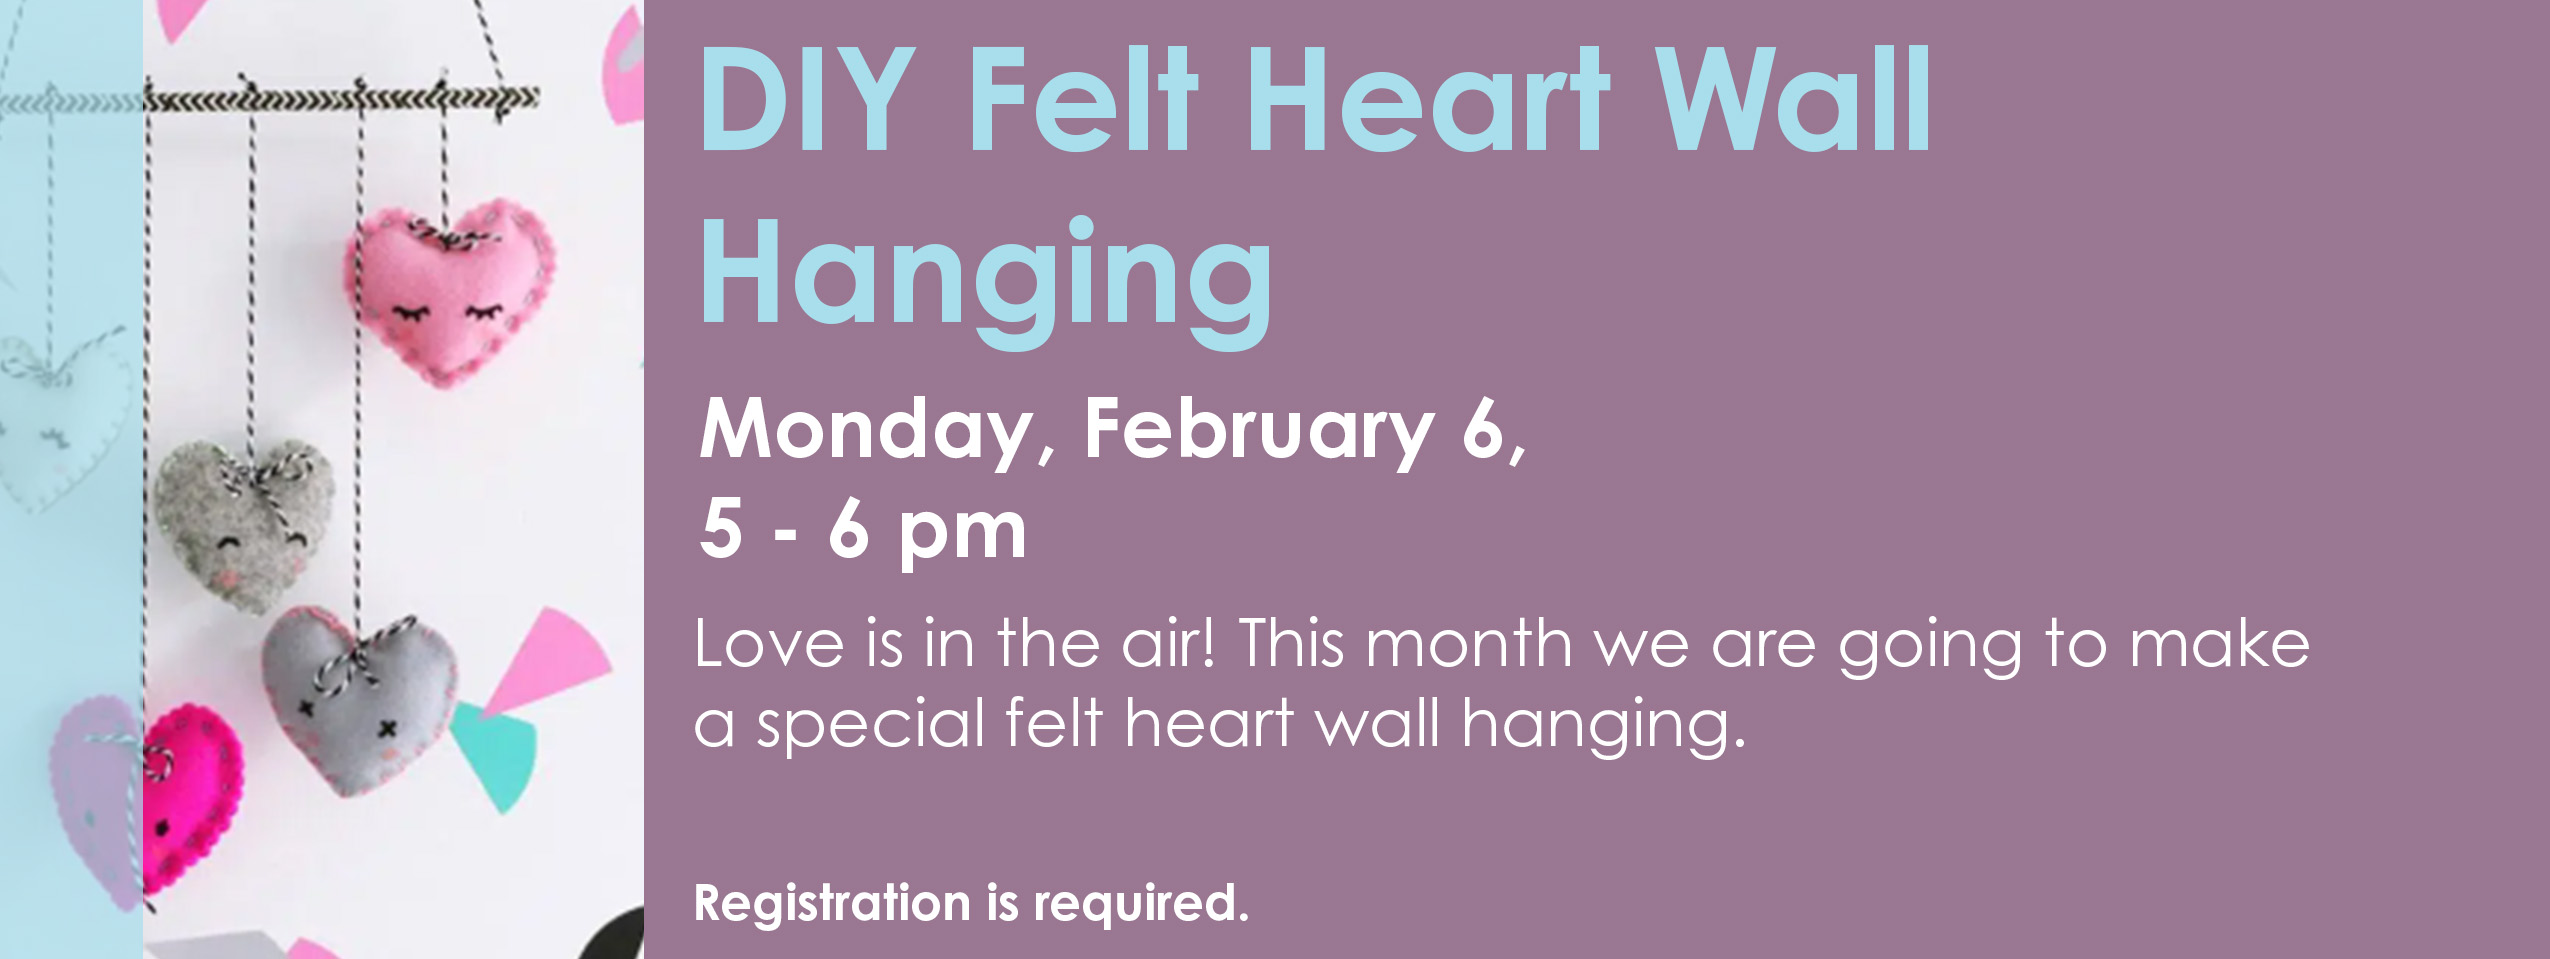 DIY Felt Heart Wall Hanging Feb 6